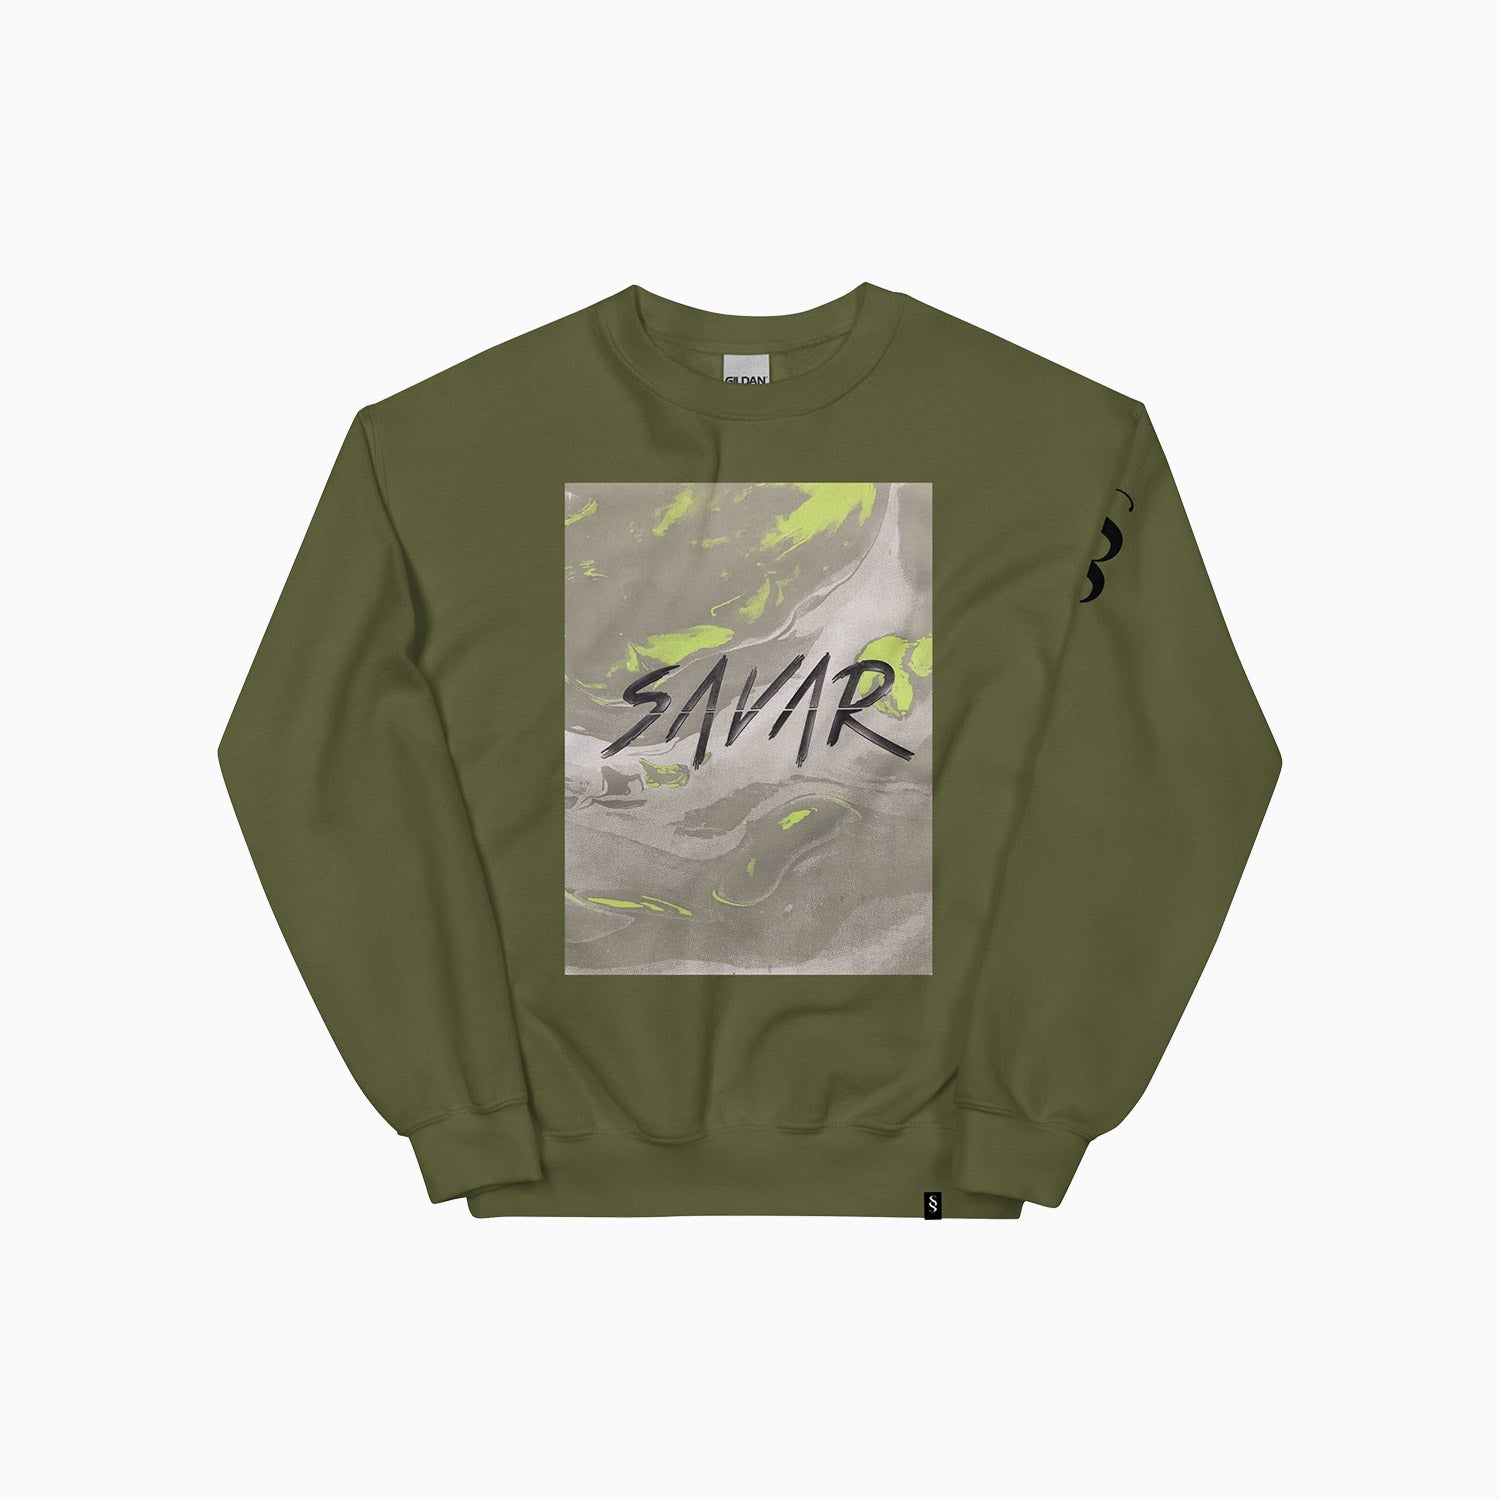 mosaic-design-printed-crew-neck-olive-green-sweatshirt-for-men-sc104-327